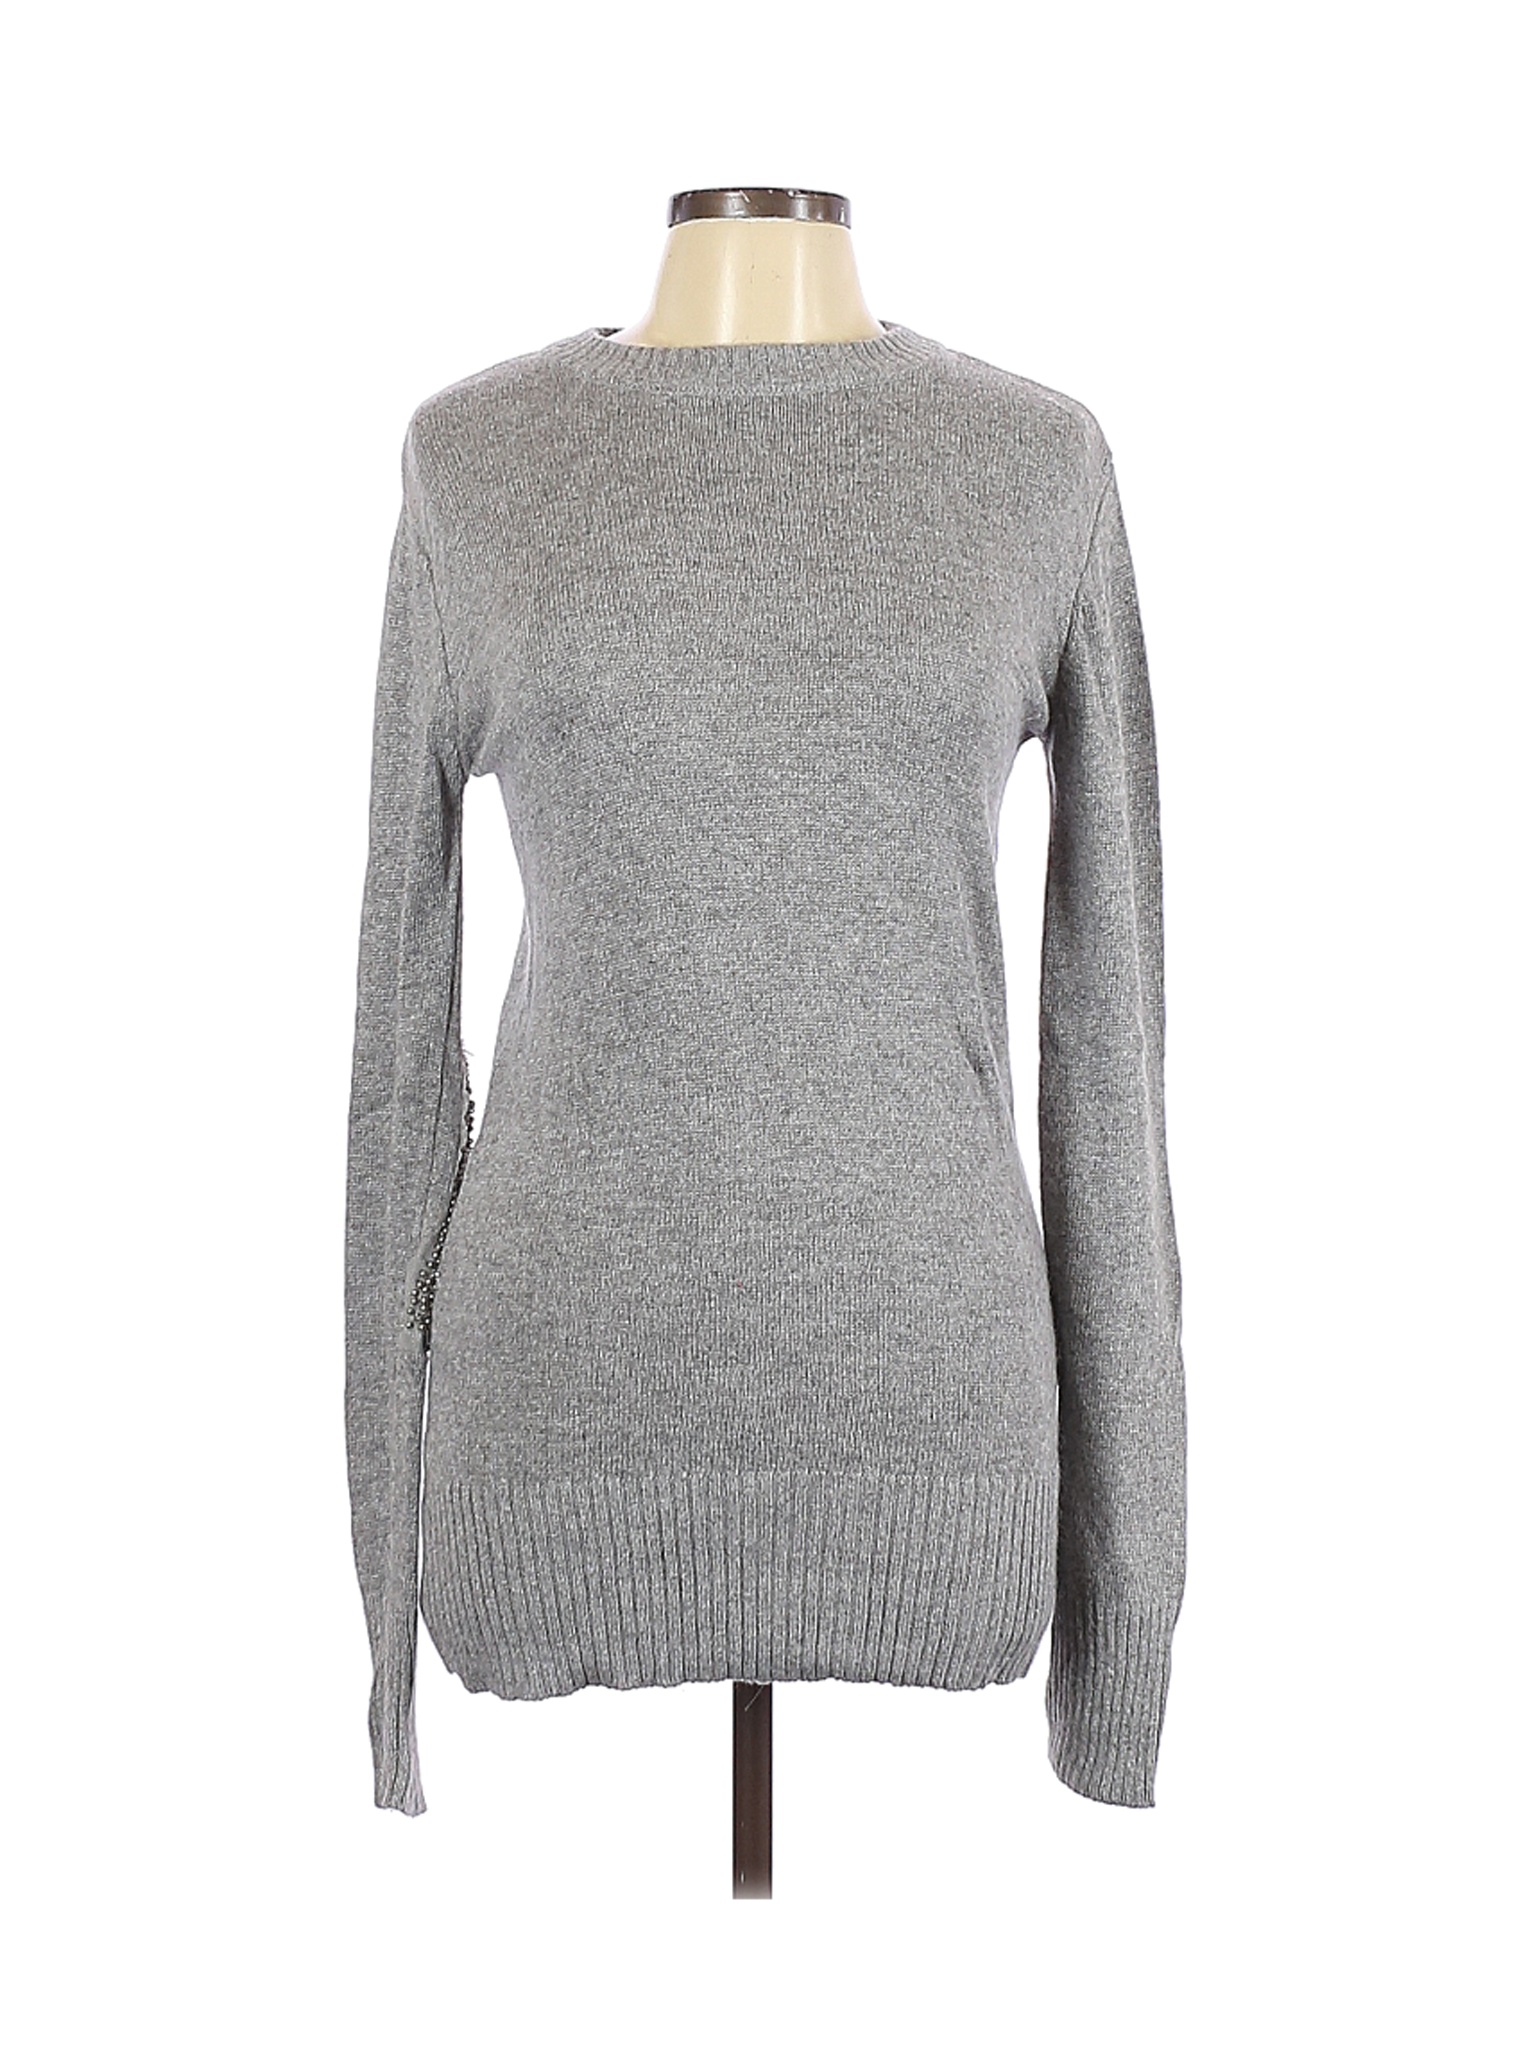 Zara Women Gray Pullover Sweater L | eBay